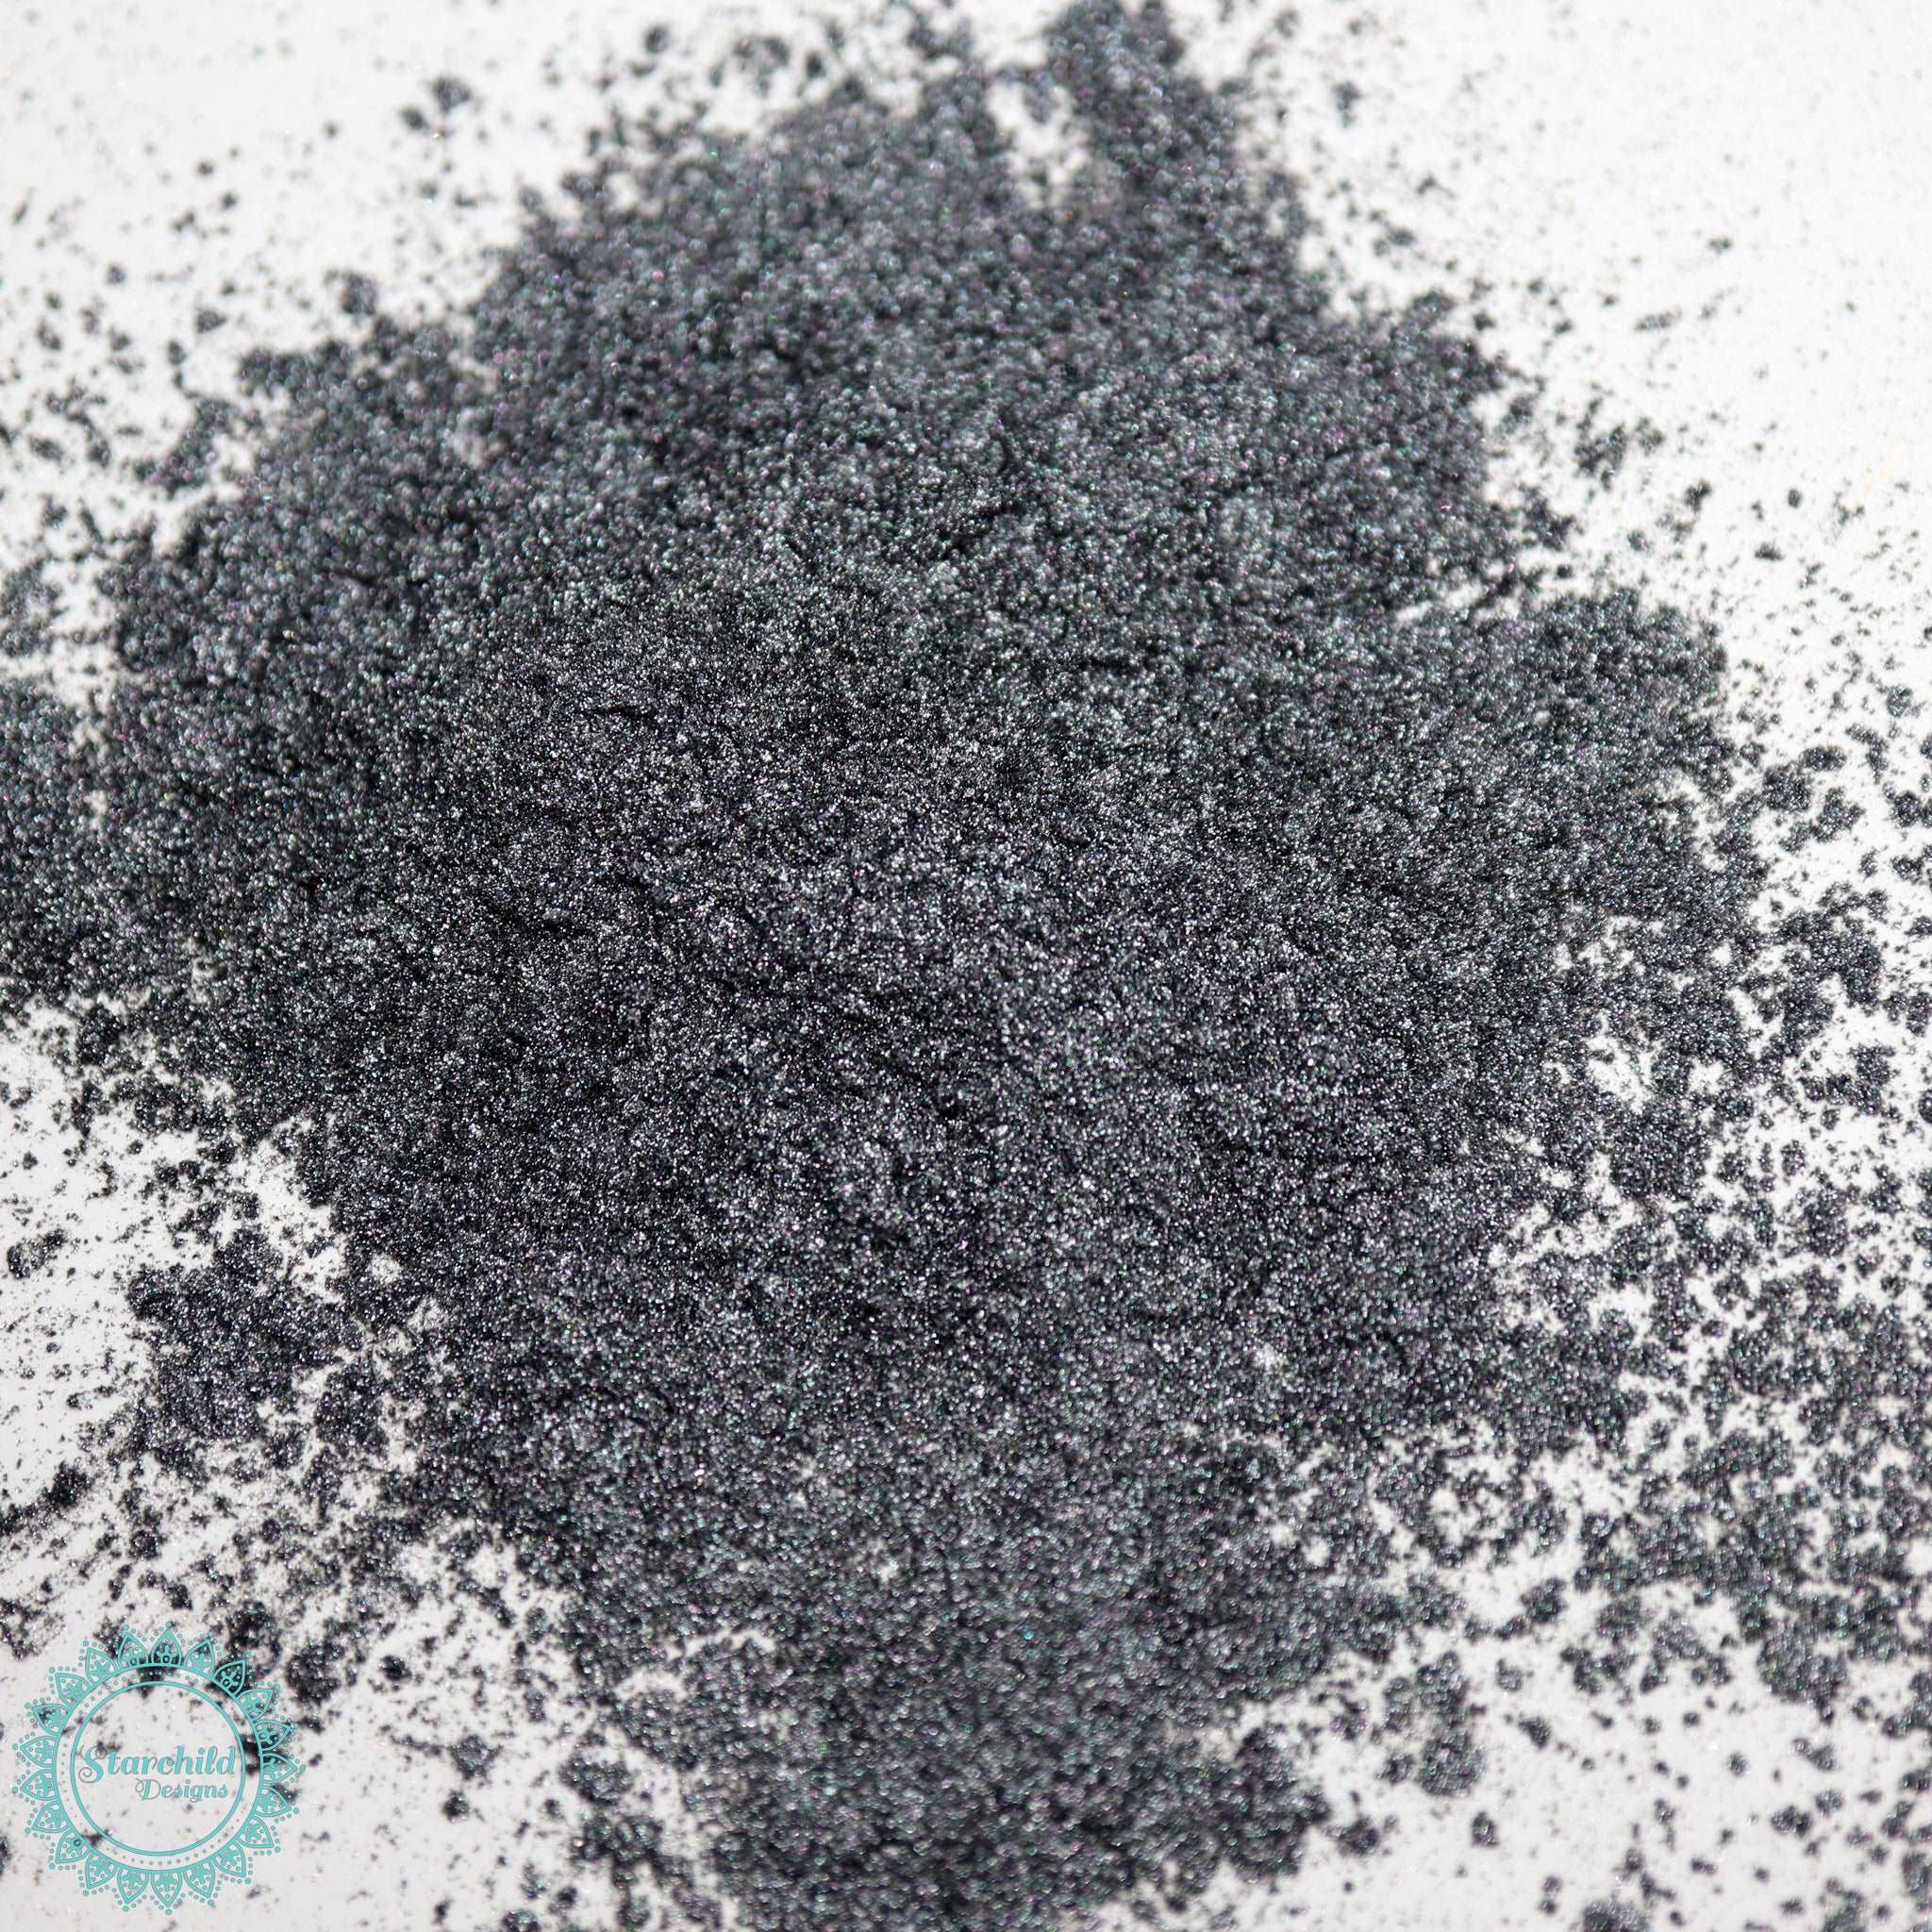 Charcoal Grey - Mica Pigment Powder, Epoxy Resin Art, Brisbane, Australia